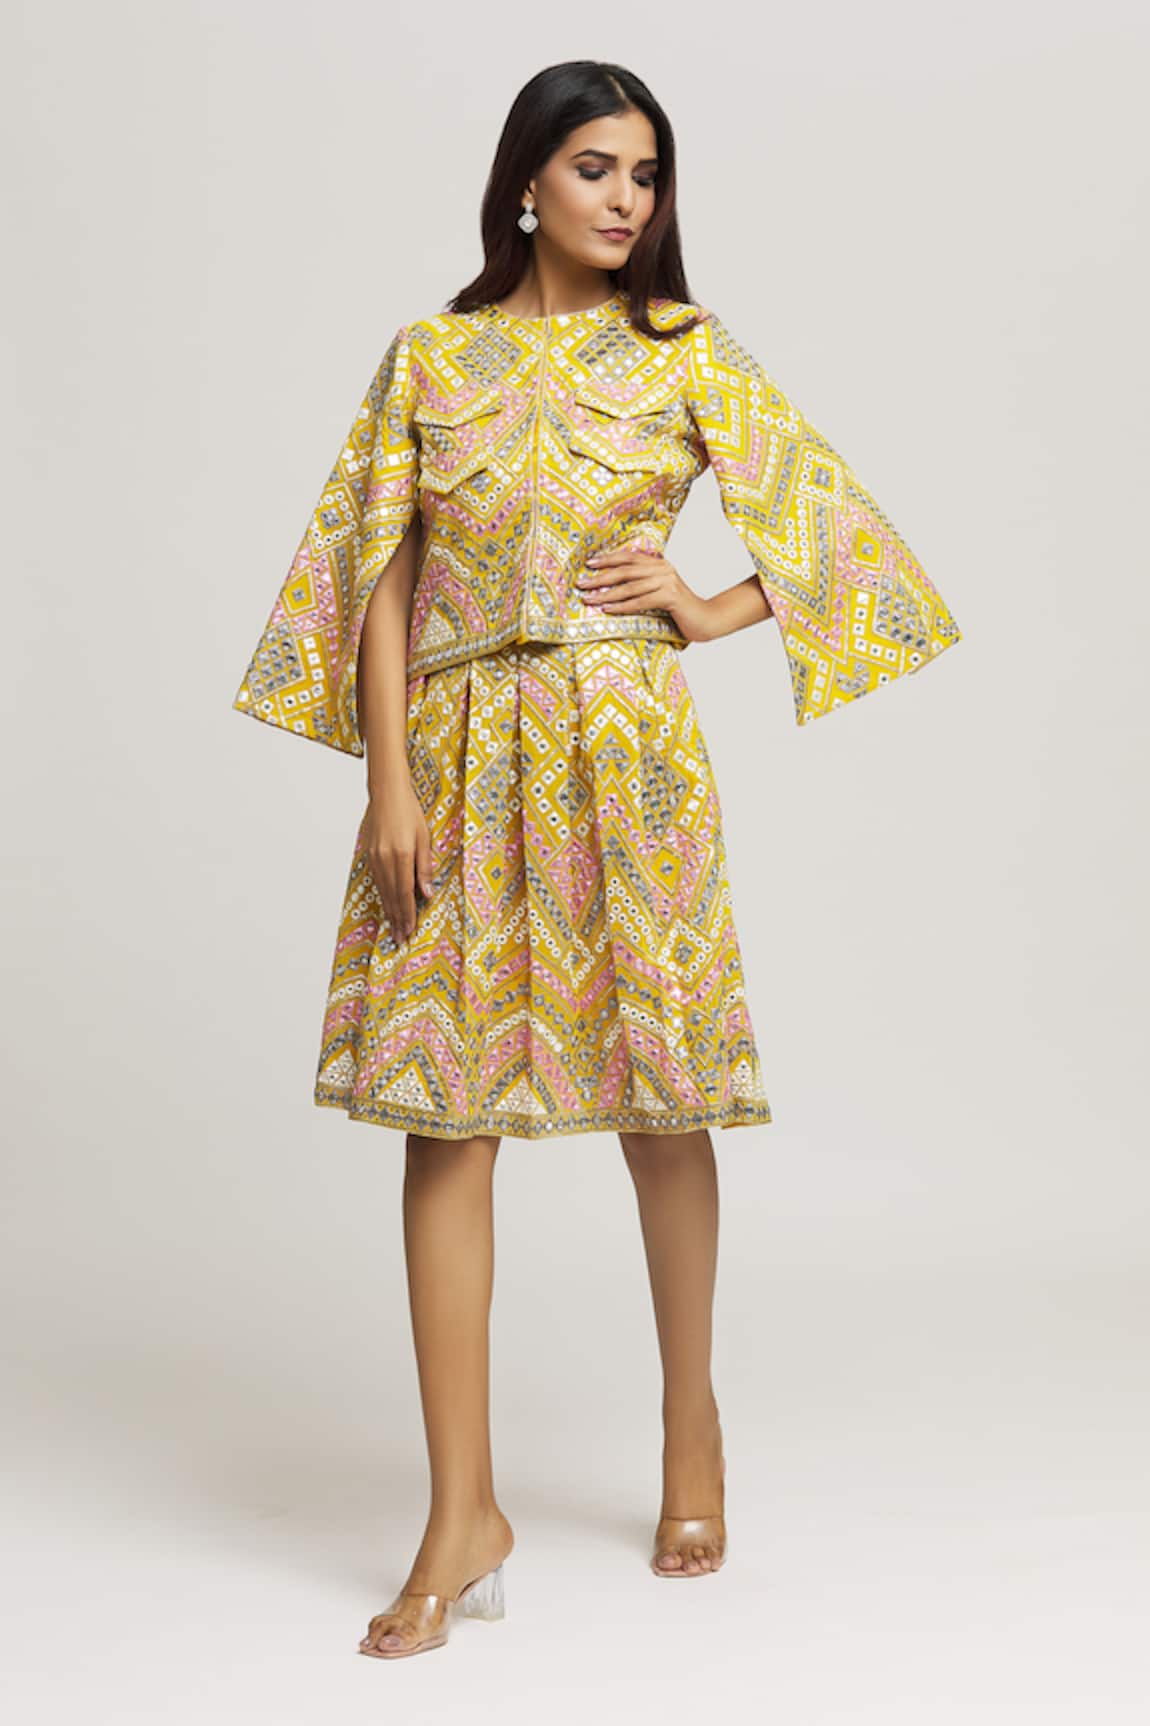 Kunwaraniritu Geometric Embroidered Top With Skirt